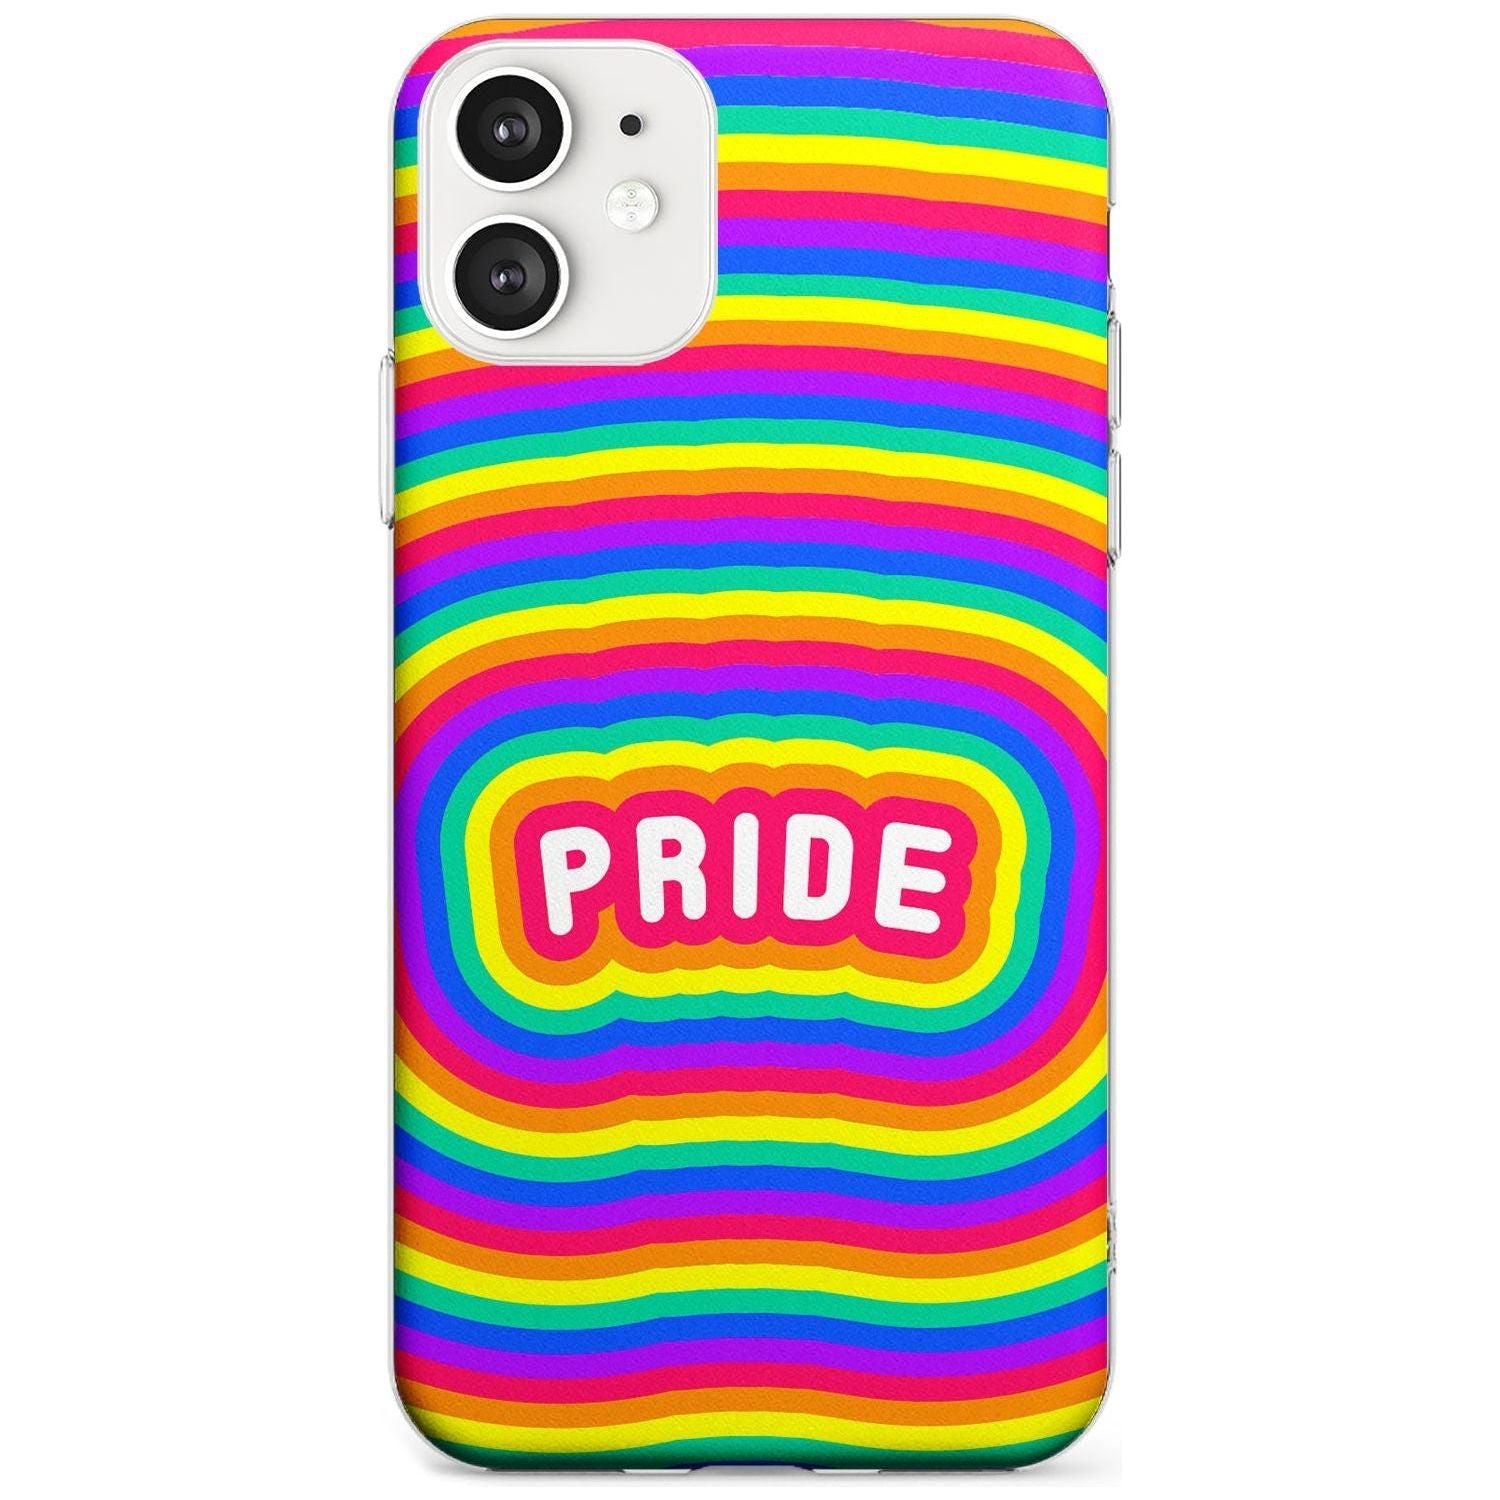 Pride Slim TPU Phone Case for iPhone 11